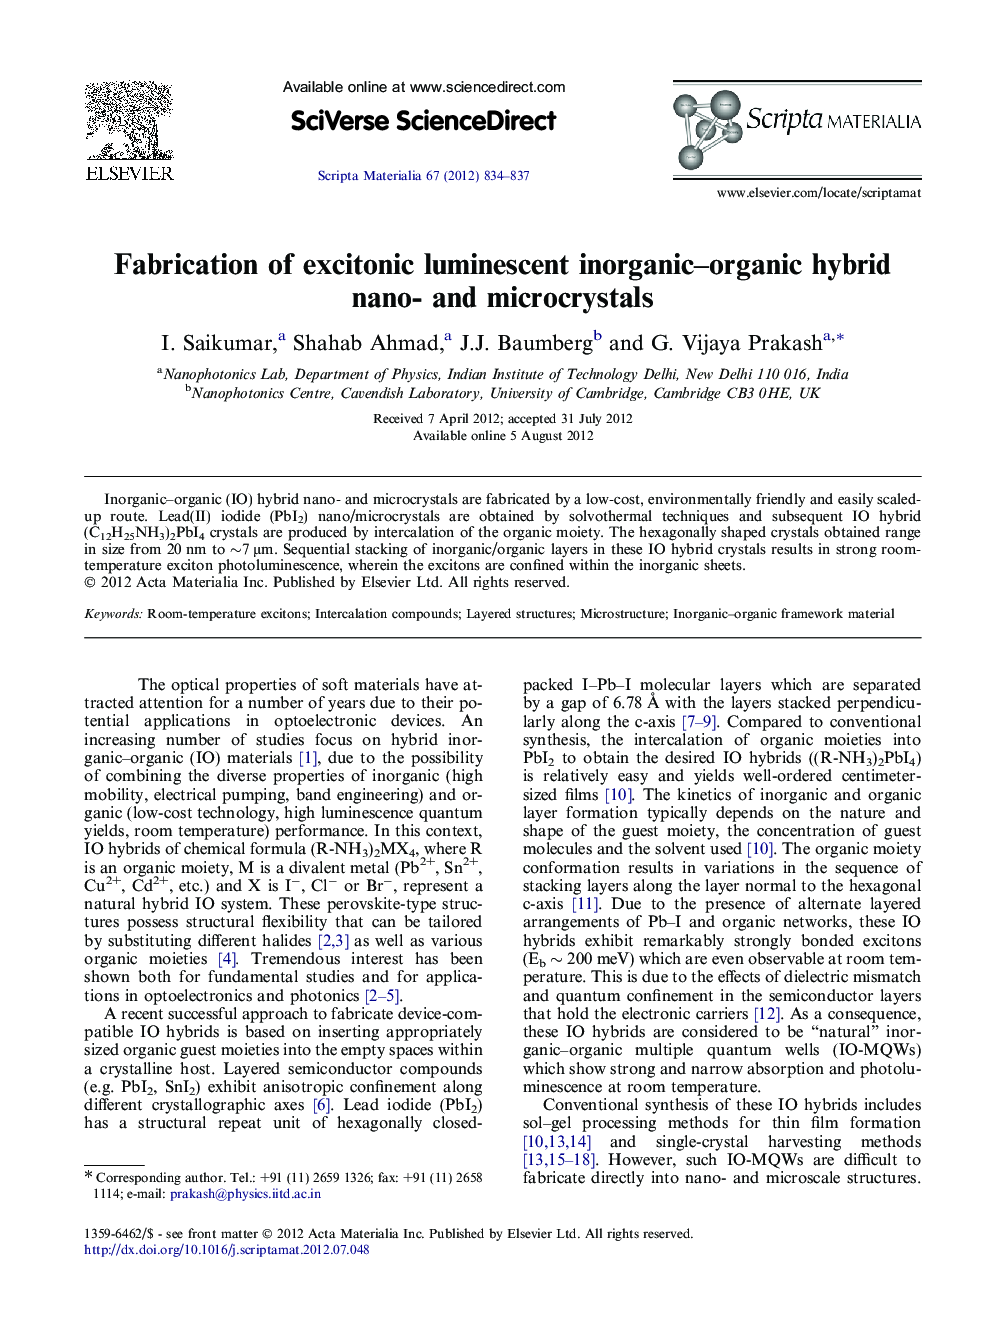 Fabrication of excitonic luminescent inorganic–organic hybrid nano- and microcrystals